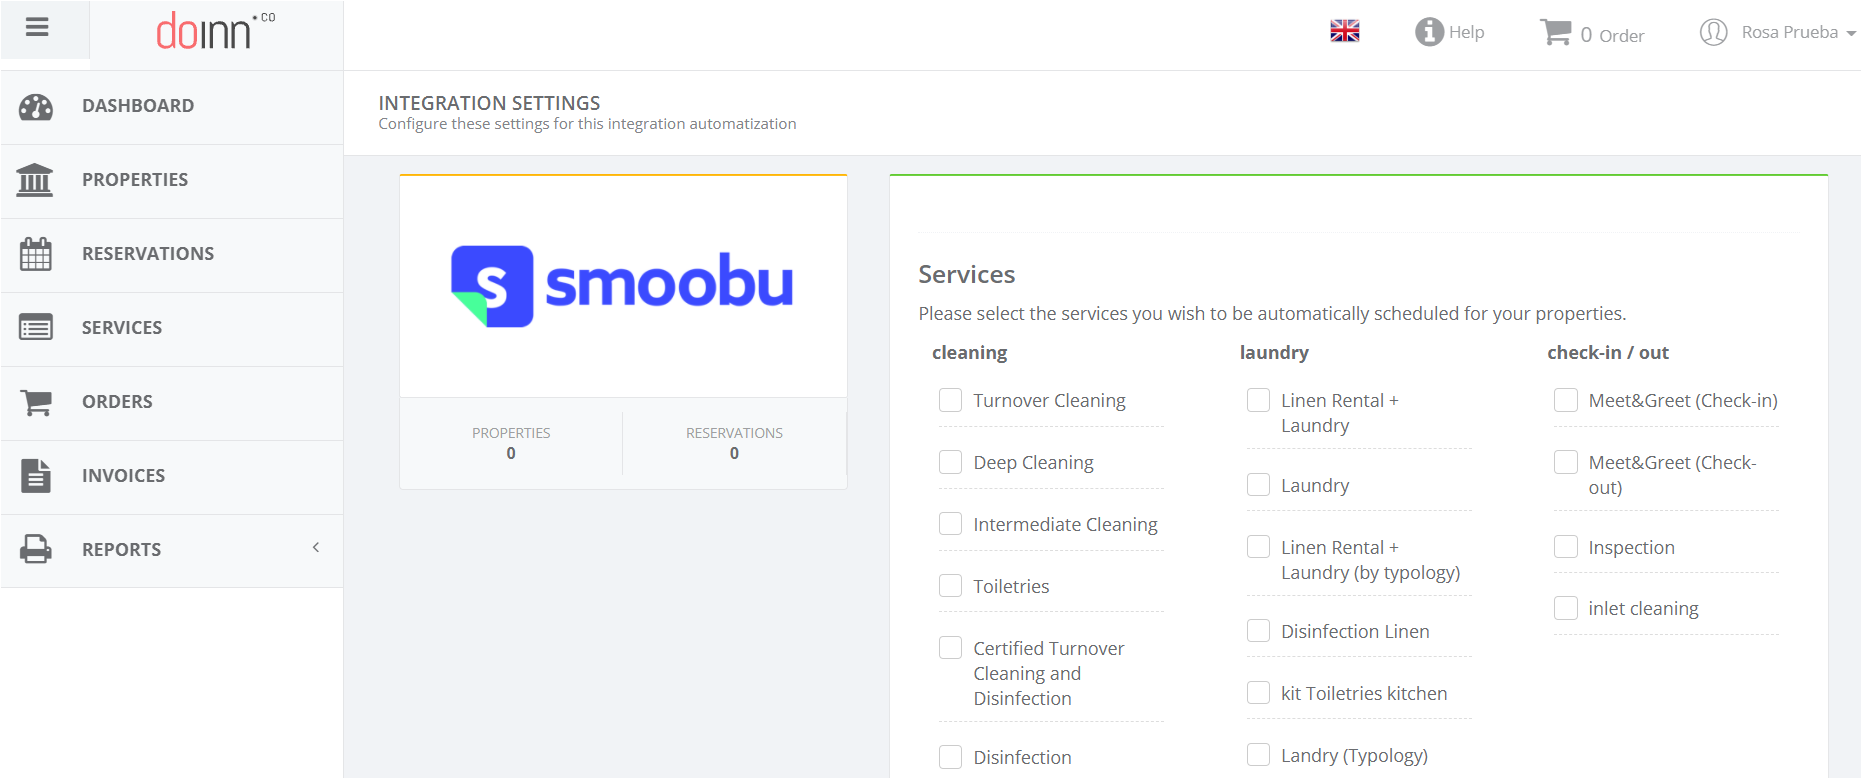 ᐅ New API Integration Doinn and Smoobu - Watch Free Webinar